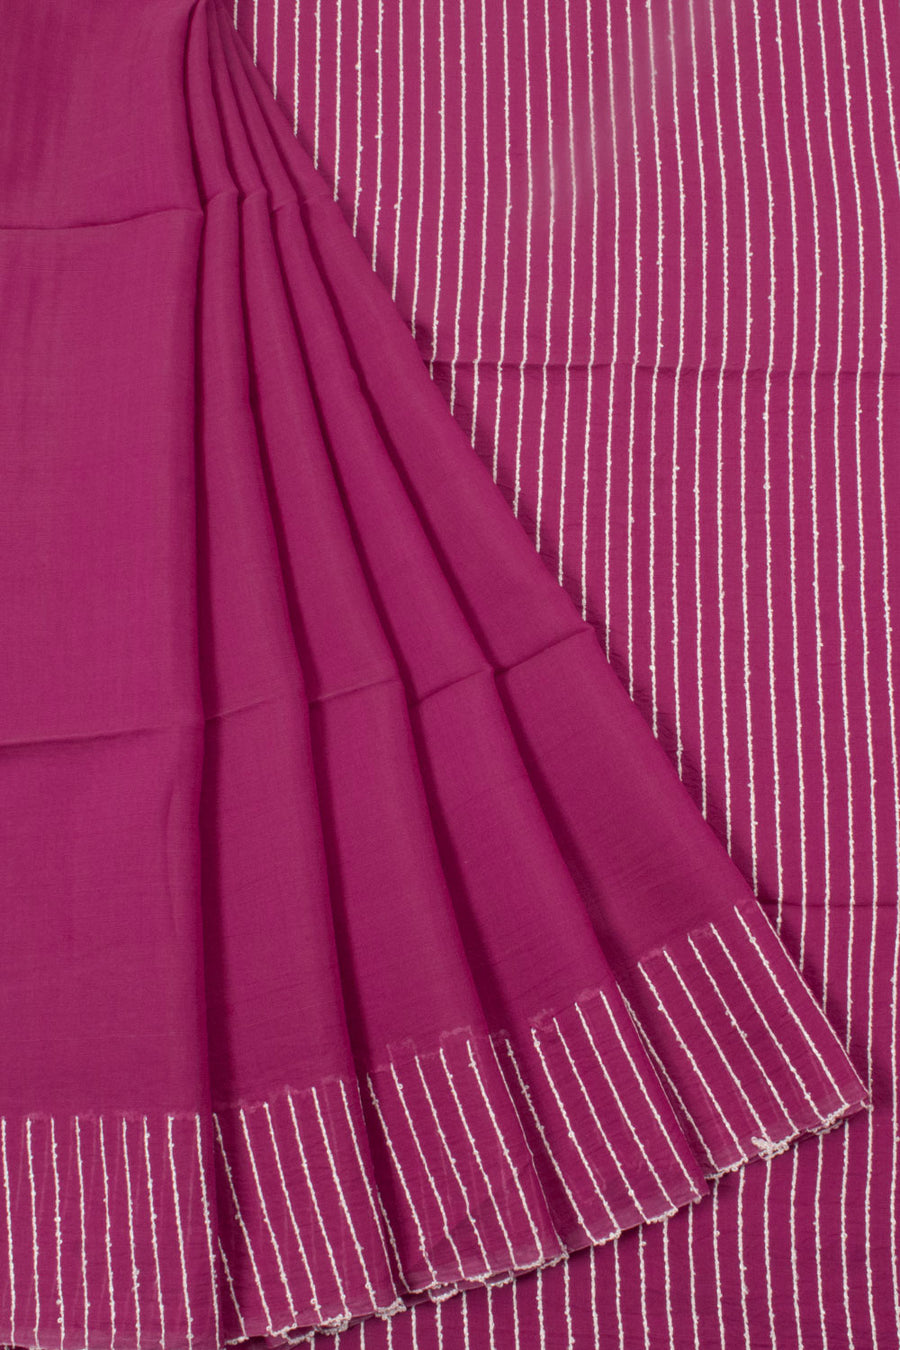 Handloom Silk Cotton Saree with Thread Stripes Design Border and Pallu